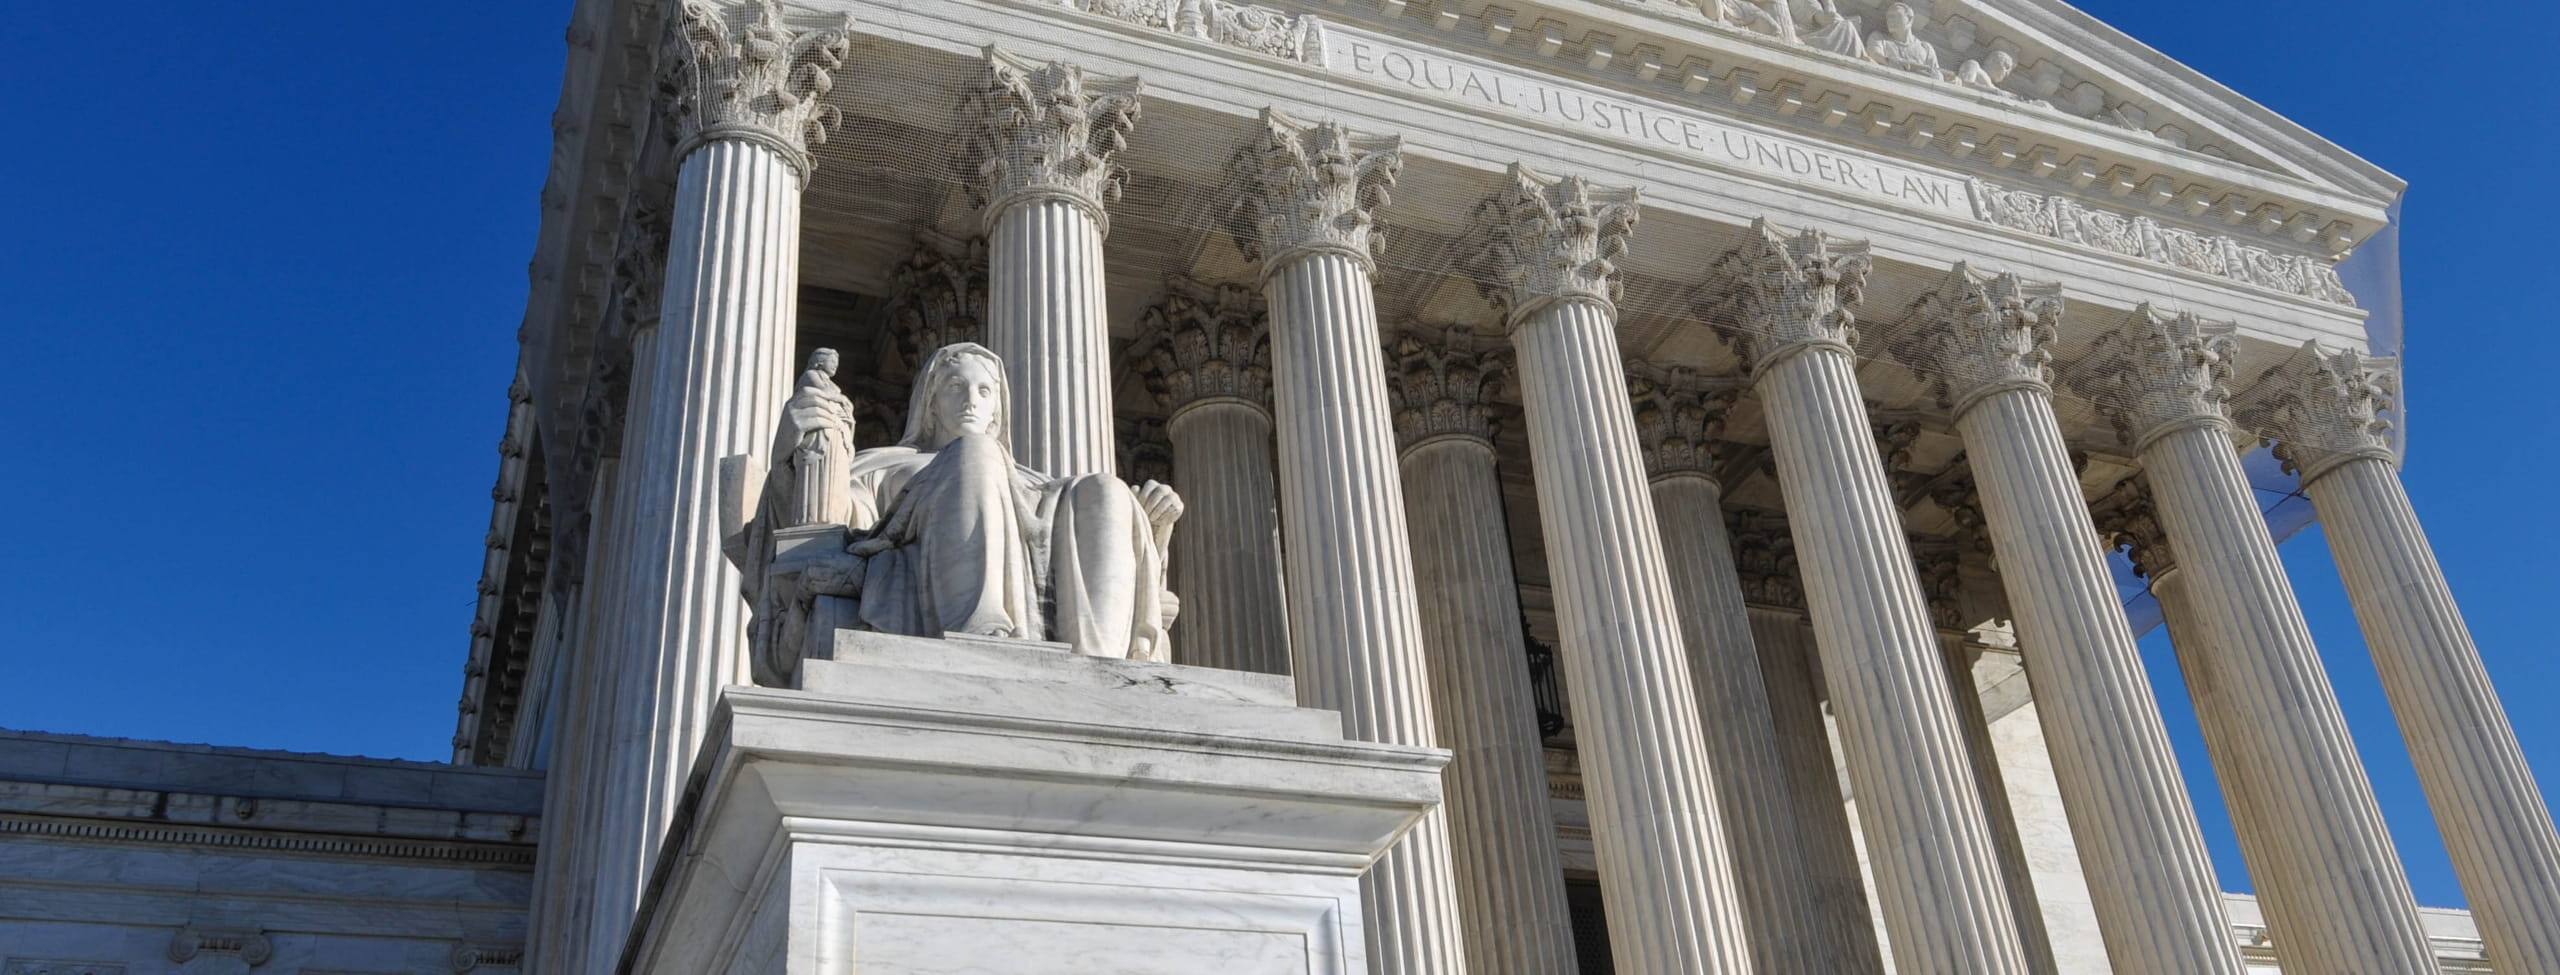 Supreme Court close-up